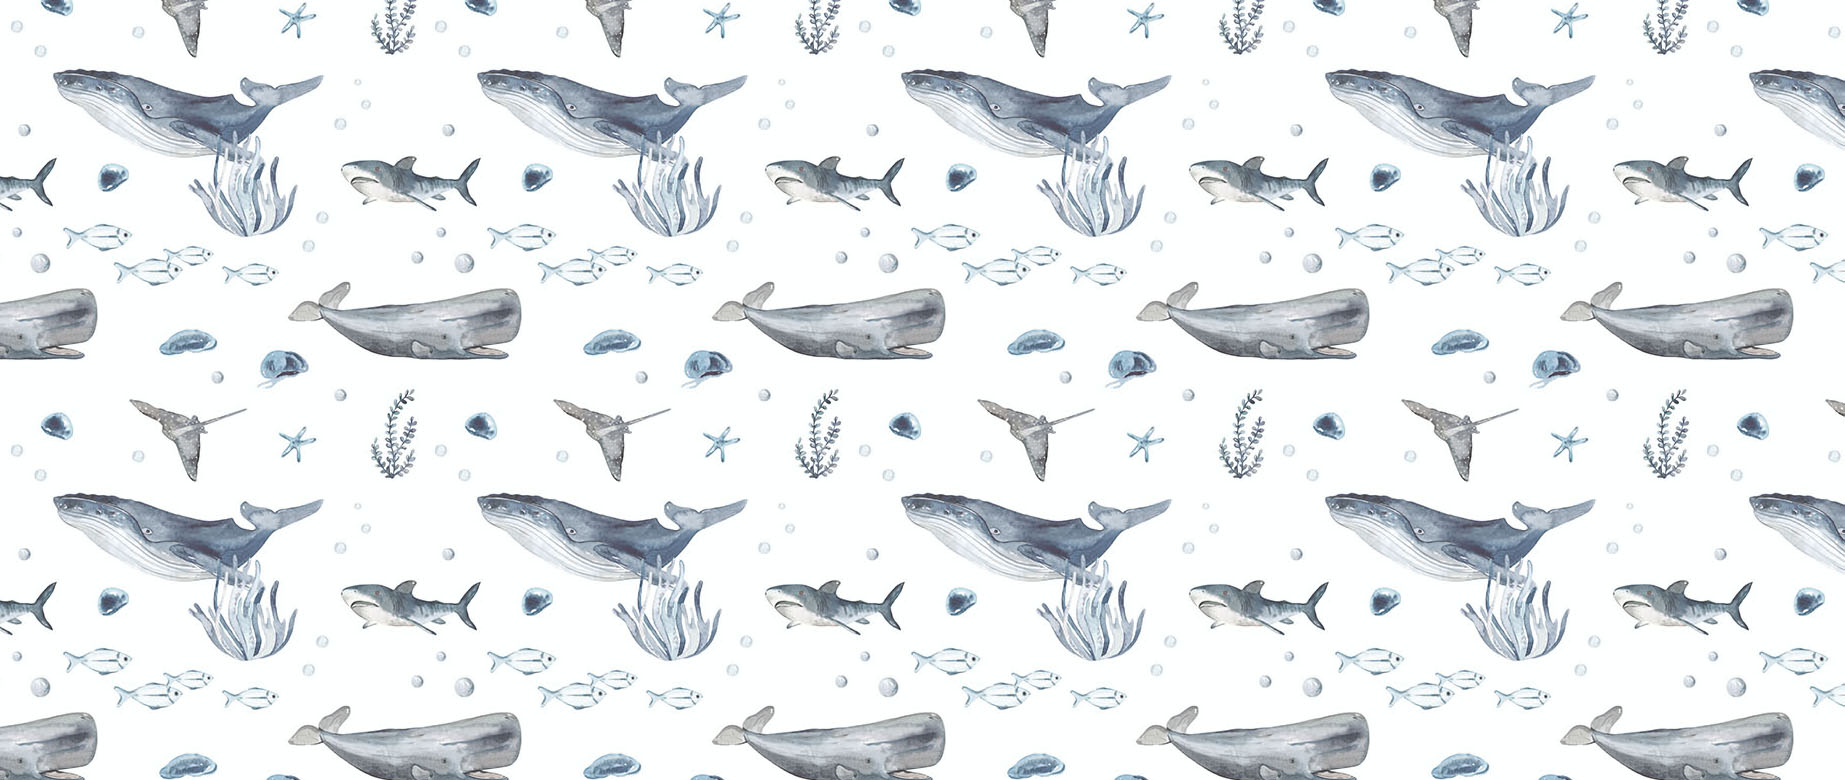 whales-in-ocean-watercolour-wallpaper-seamless-repeat-view